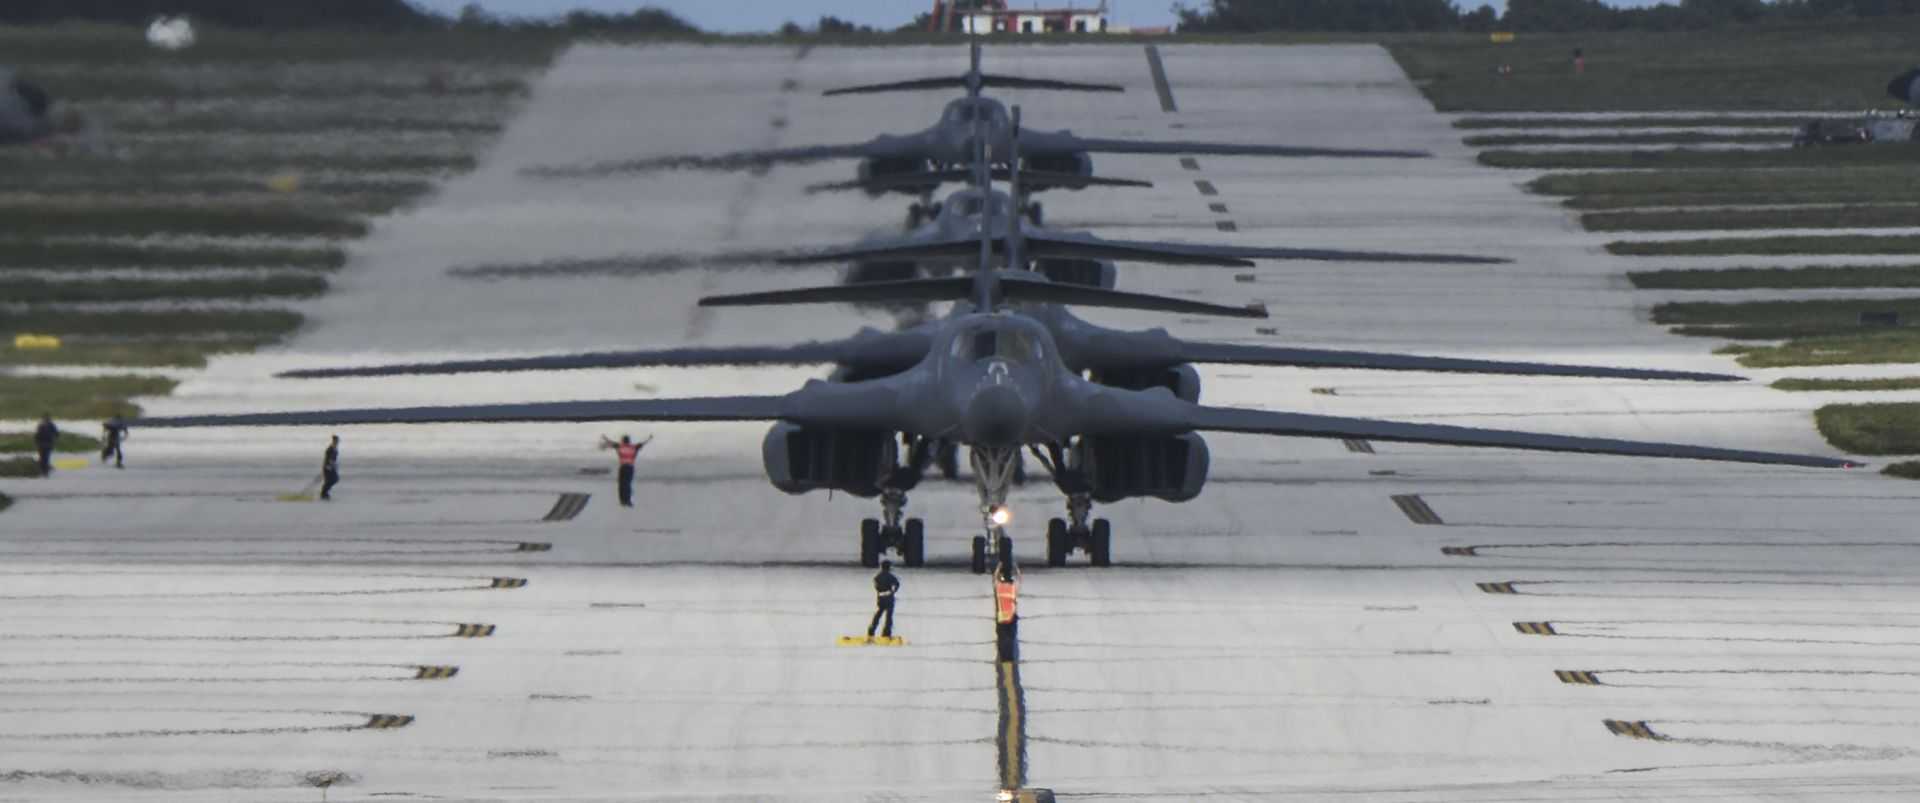 U.S. Air Force B-1B Lancer bombers